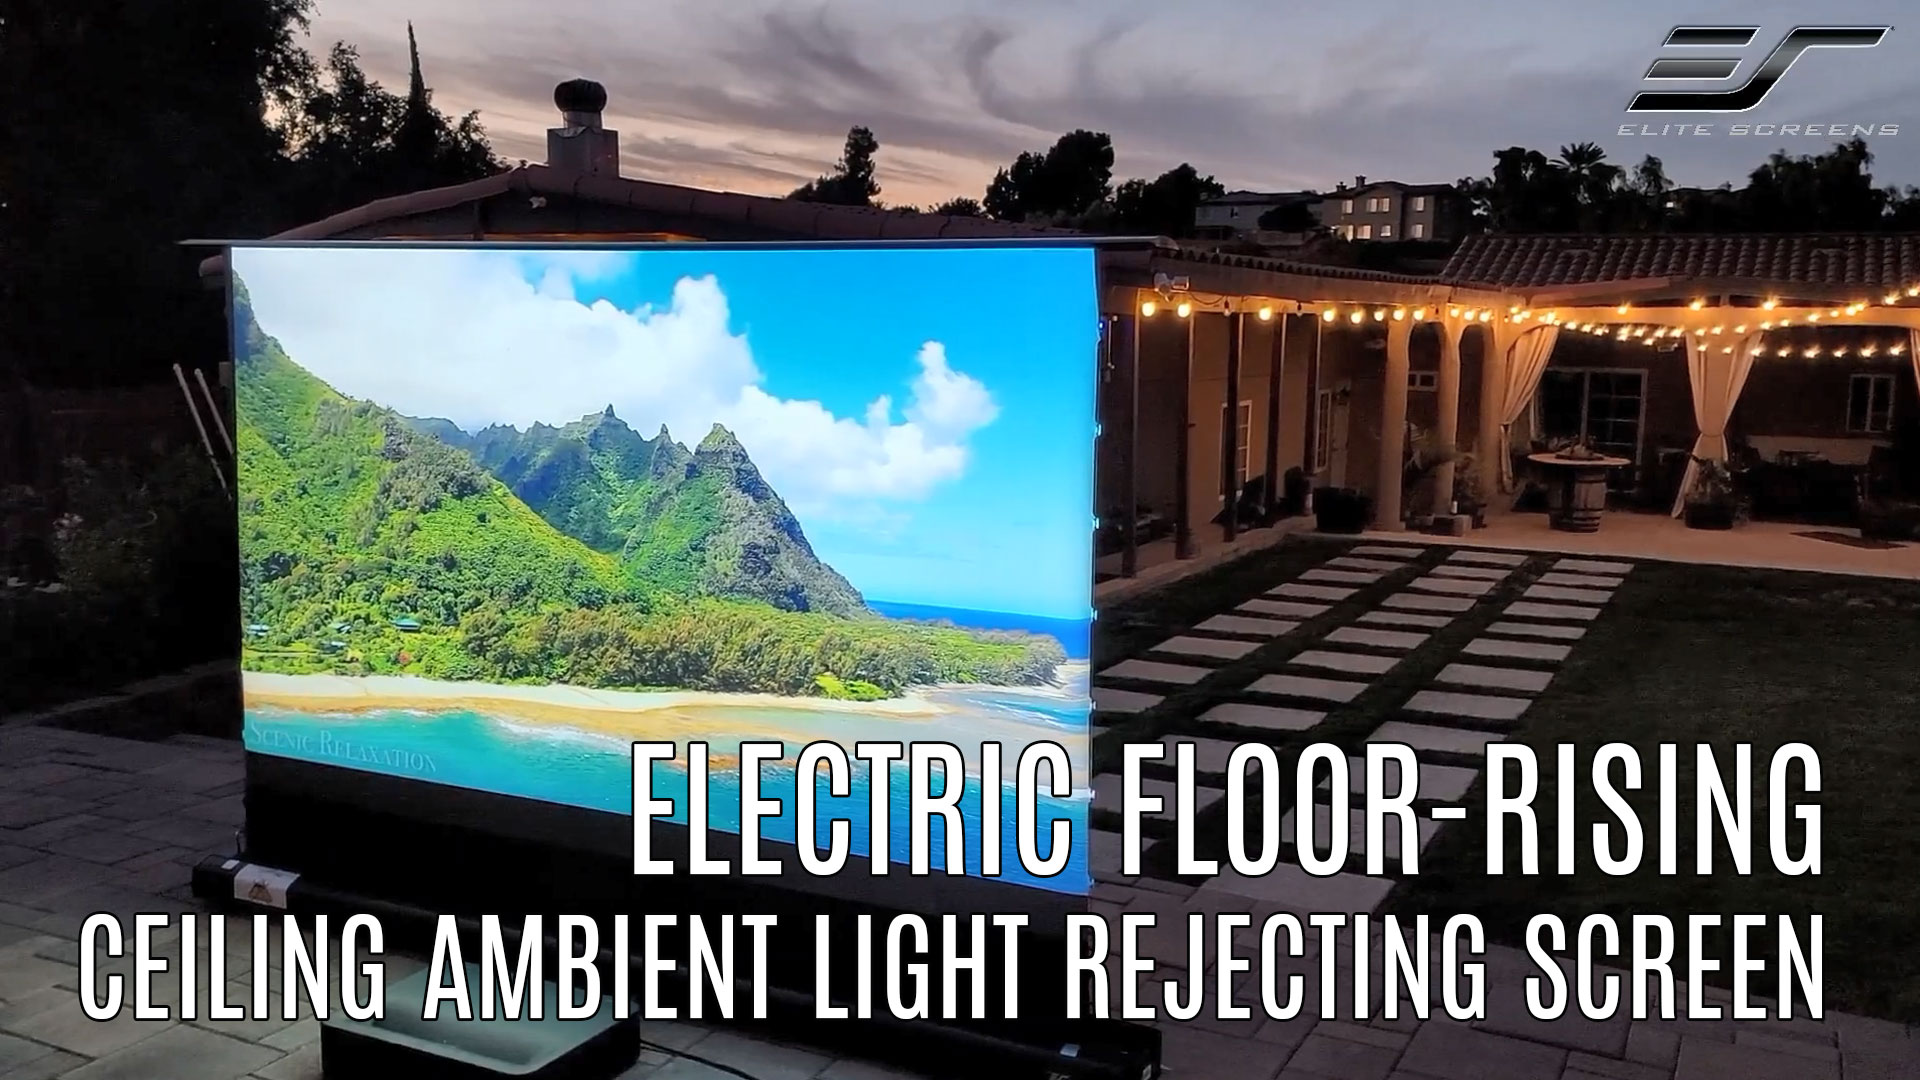 ✔ Elite Screens Kestrel Tab-Tension CLR® Electric Floor-Rising Ceiling ALR Projector Screen